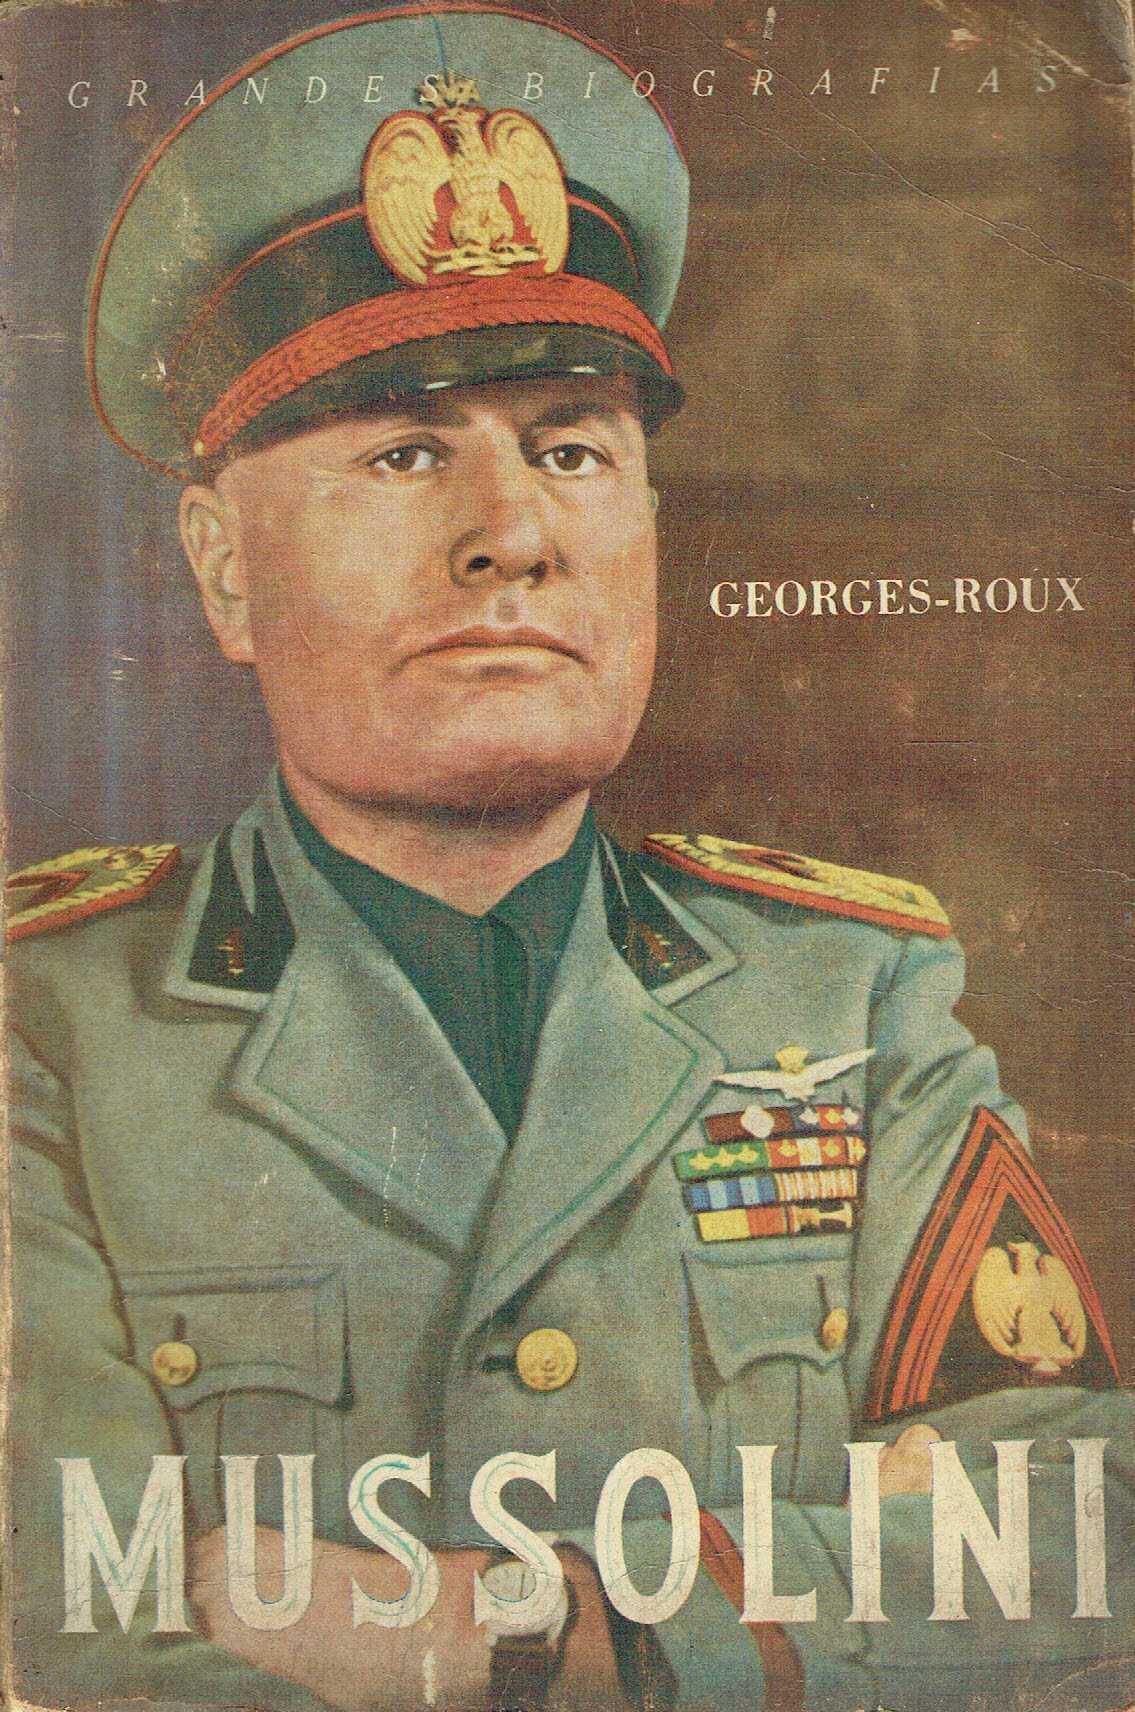 14404

Mussolini
de Georges-Roux